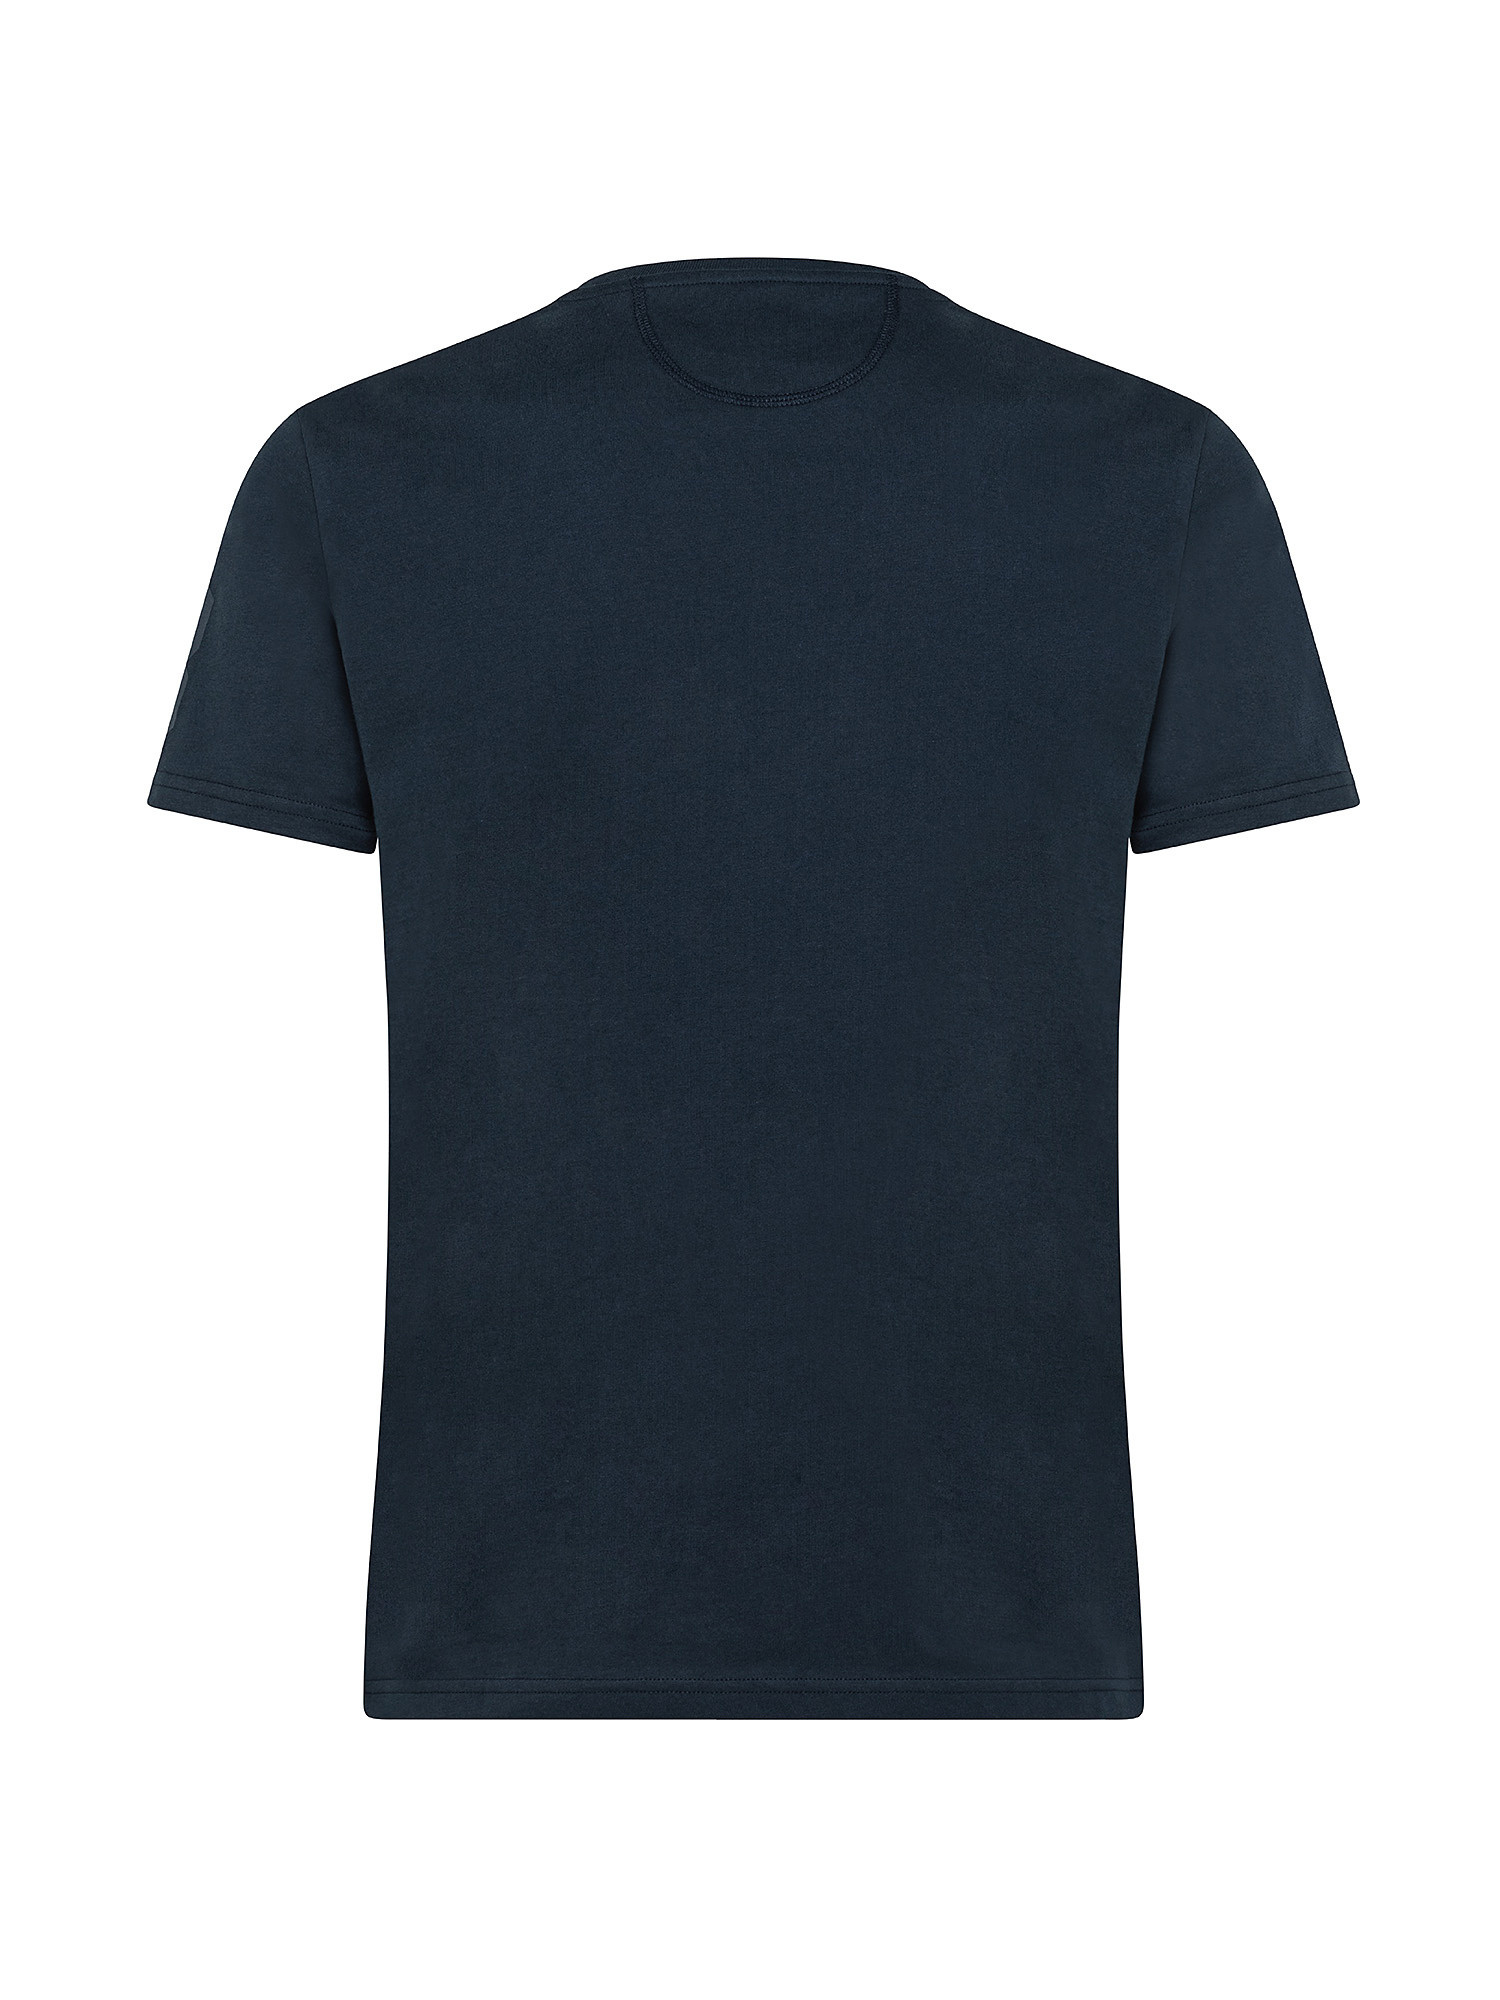 T-shirt a maniche corte in cotone regular fit, Blu, large image number 1